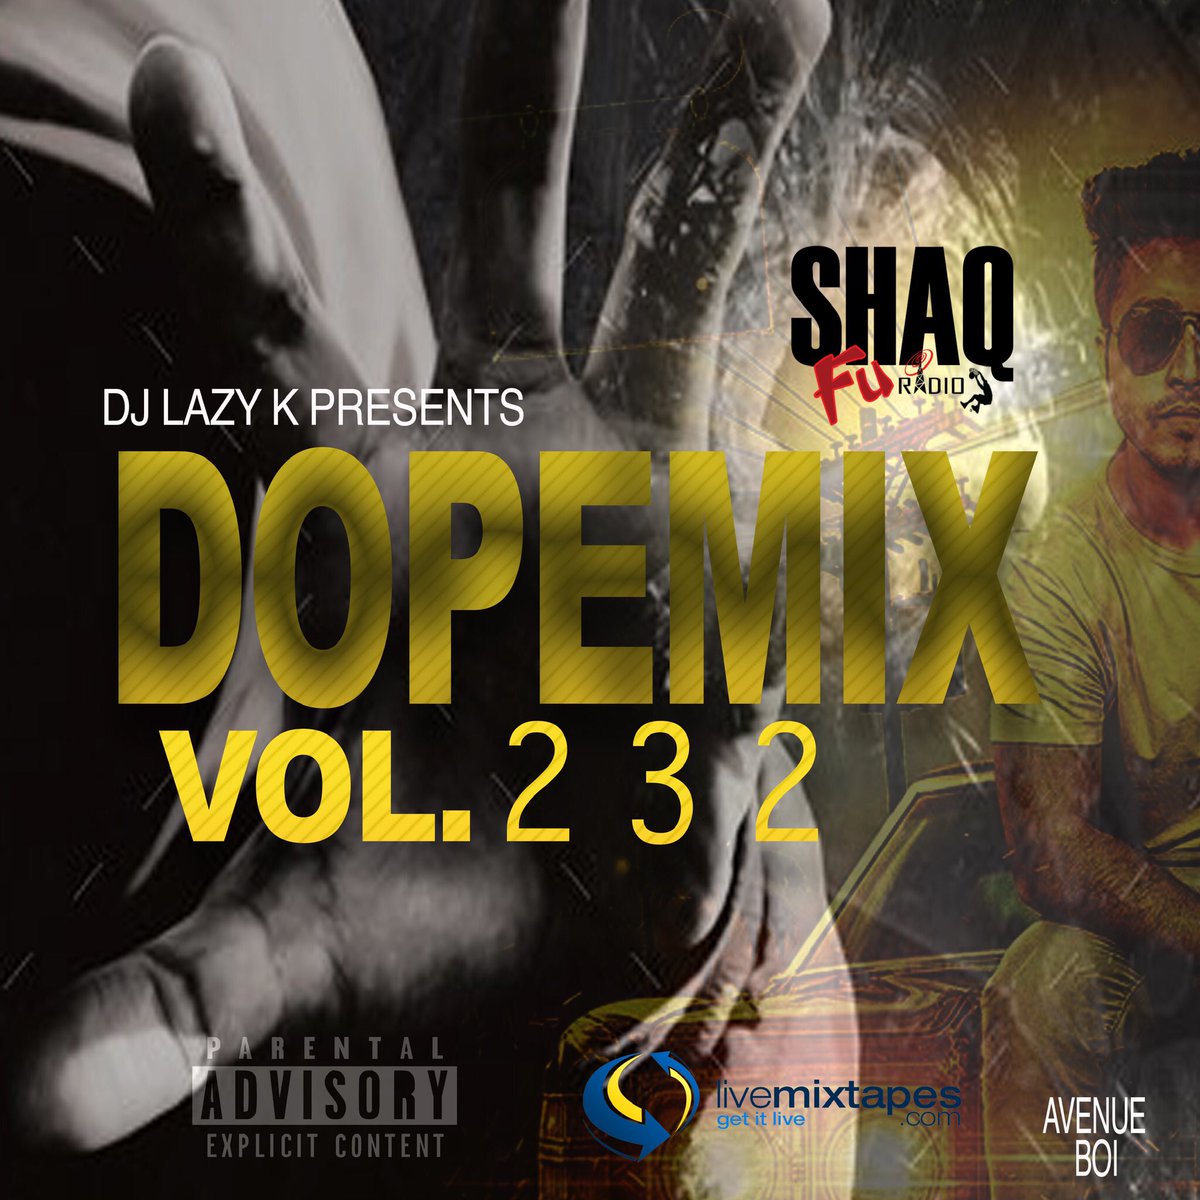 Send mp3 song to get on #dopemix vol.232 Djlazyklive@gmail.com (OPEN SLOTS) #themixtapequeen @DJLAZYK